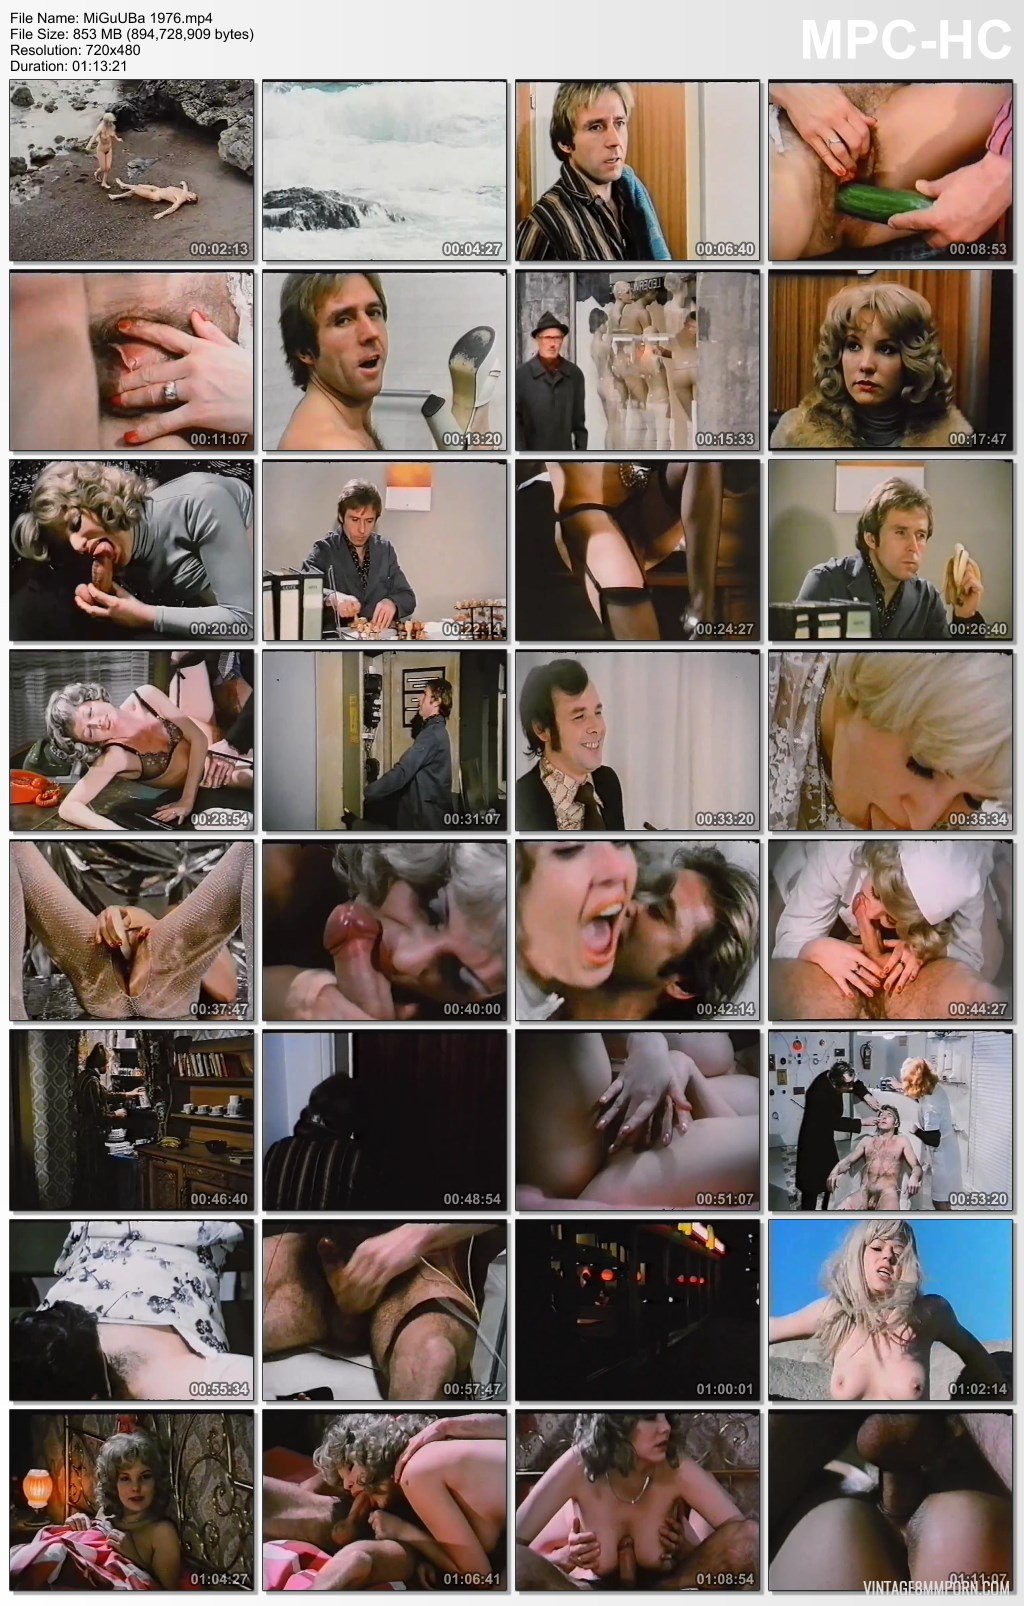 Mit Gurke Sex Kompoz - Mit Gurke und Banane (1978) Â» Vintage 8mm Porn, 8mm Sex Films, Classic Porn,  Stag Movies, Glamour Films, Silent loops, Reel Porn